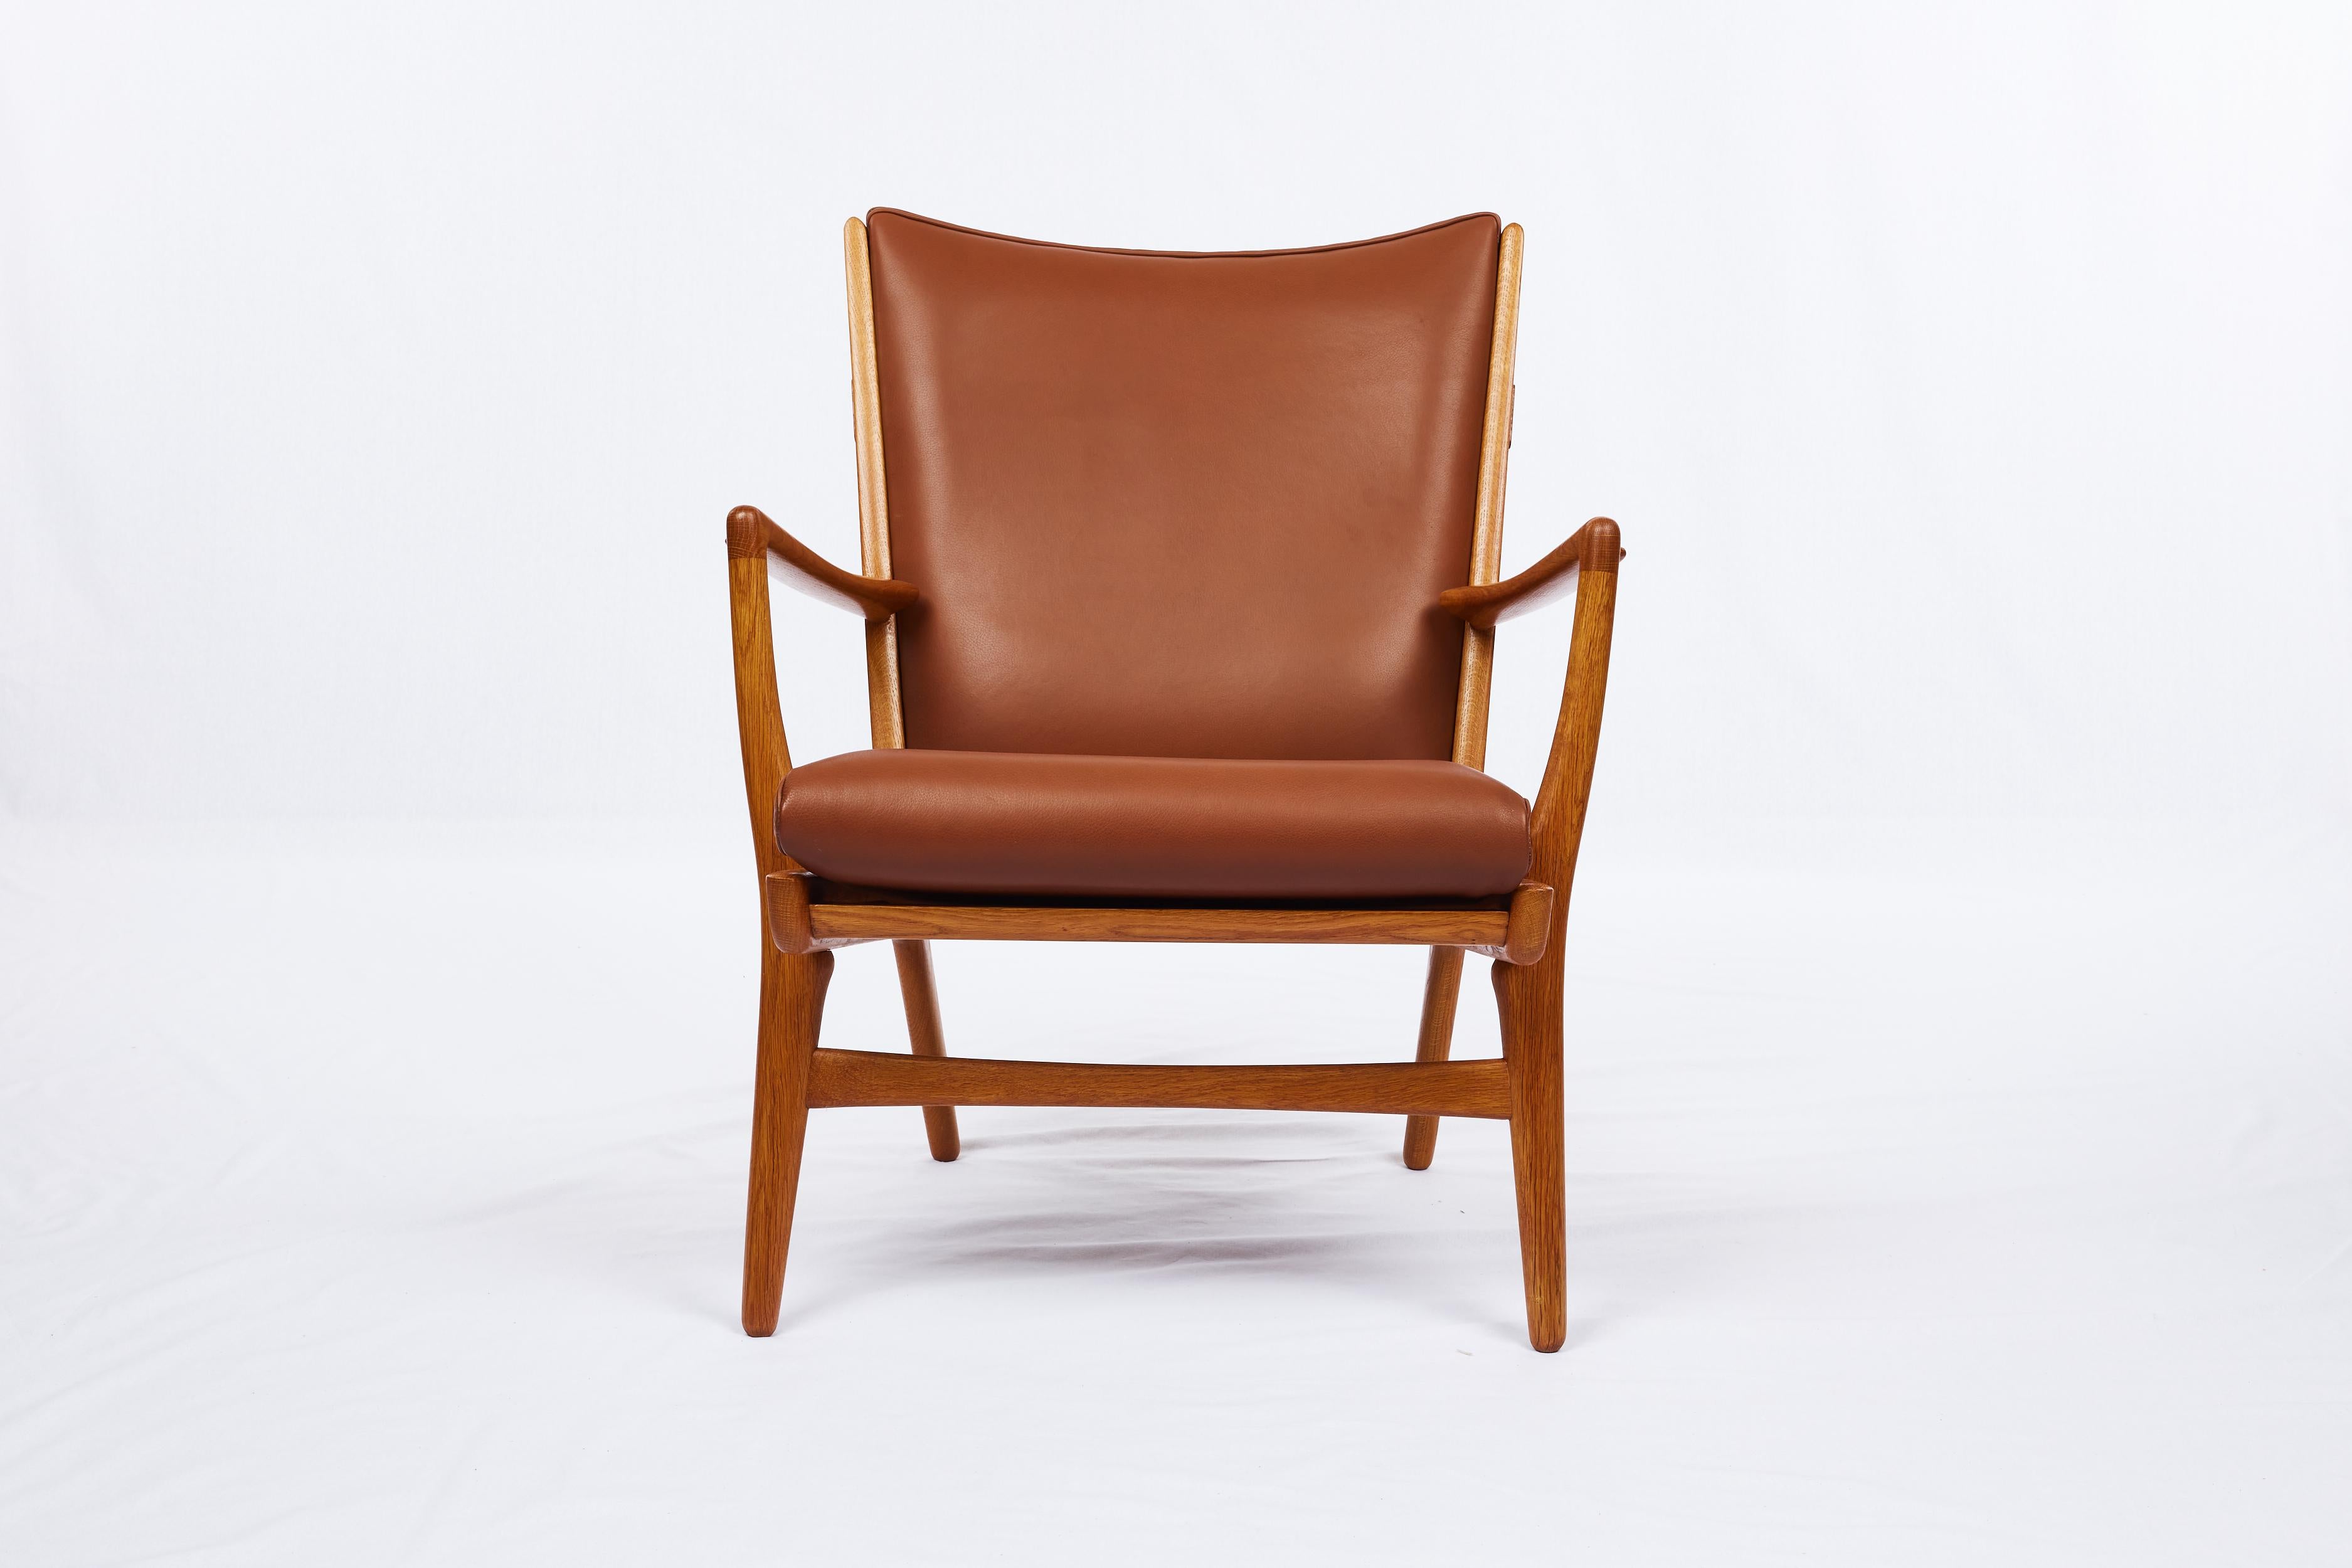 Hans Wegner AP-16 lounge chair. Designed in 1951. Produced by AP Stolen.